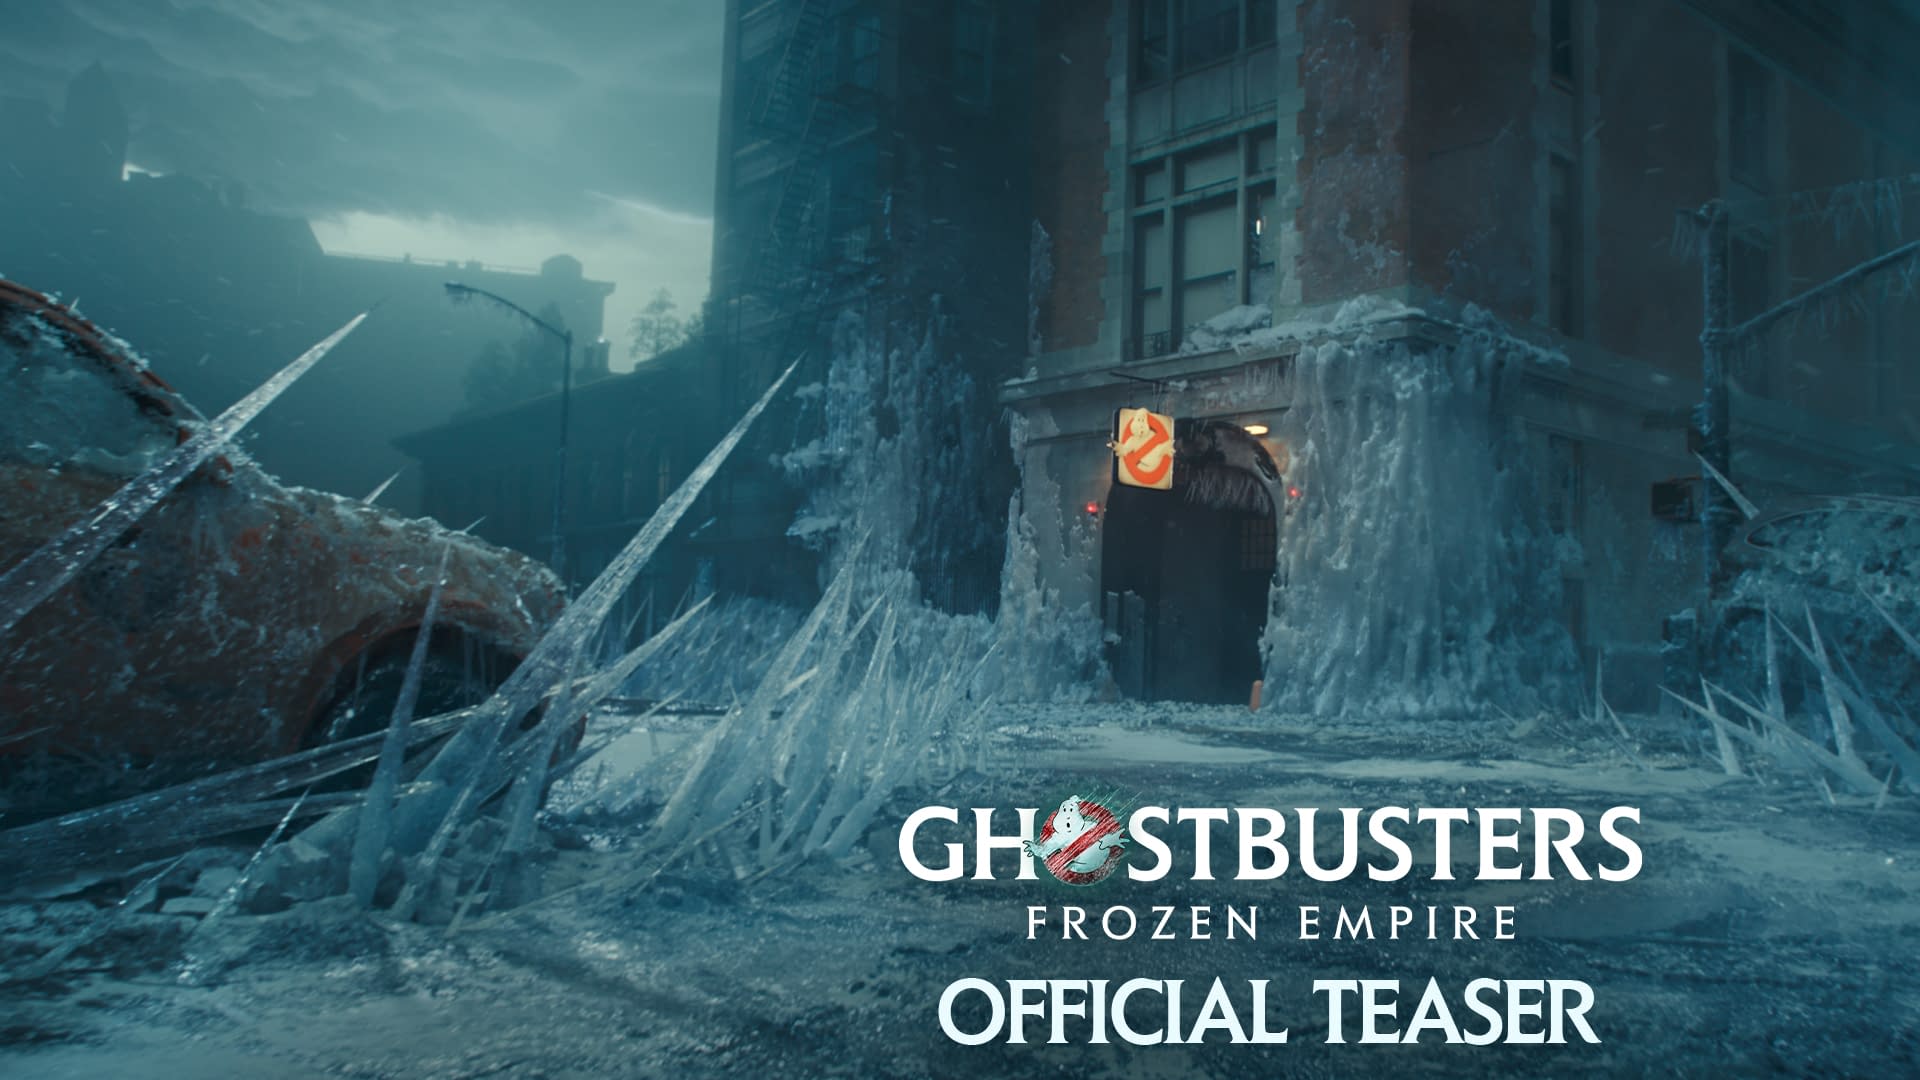 Ghostbusters Frozen Empire Teaser Trailer Released